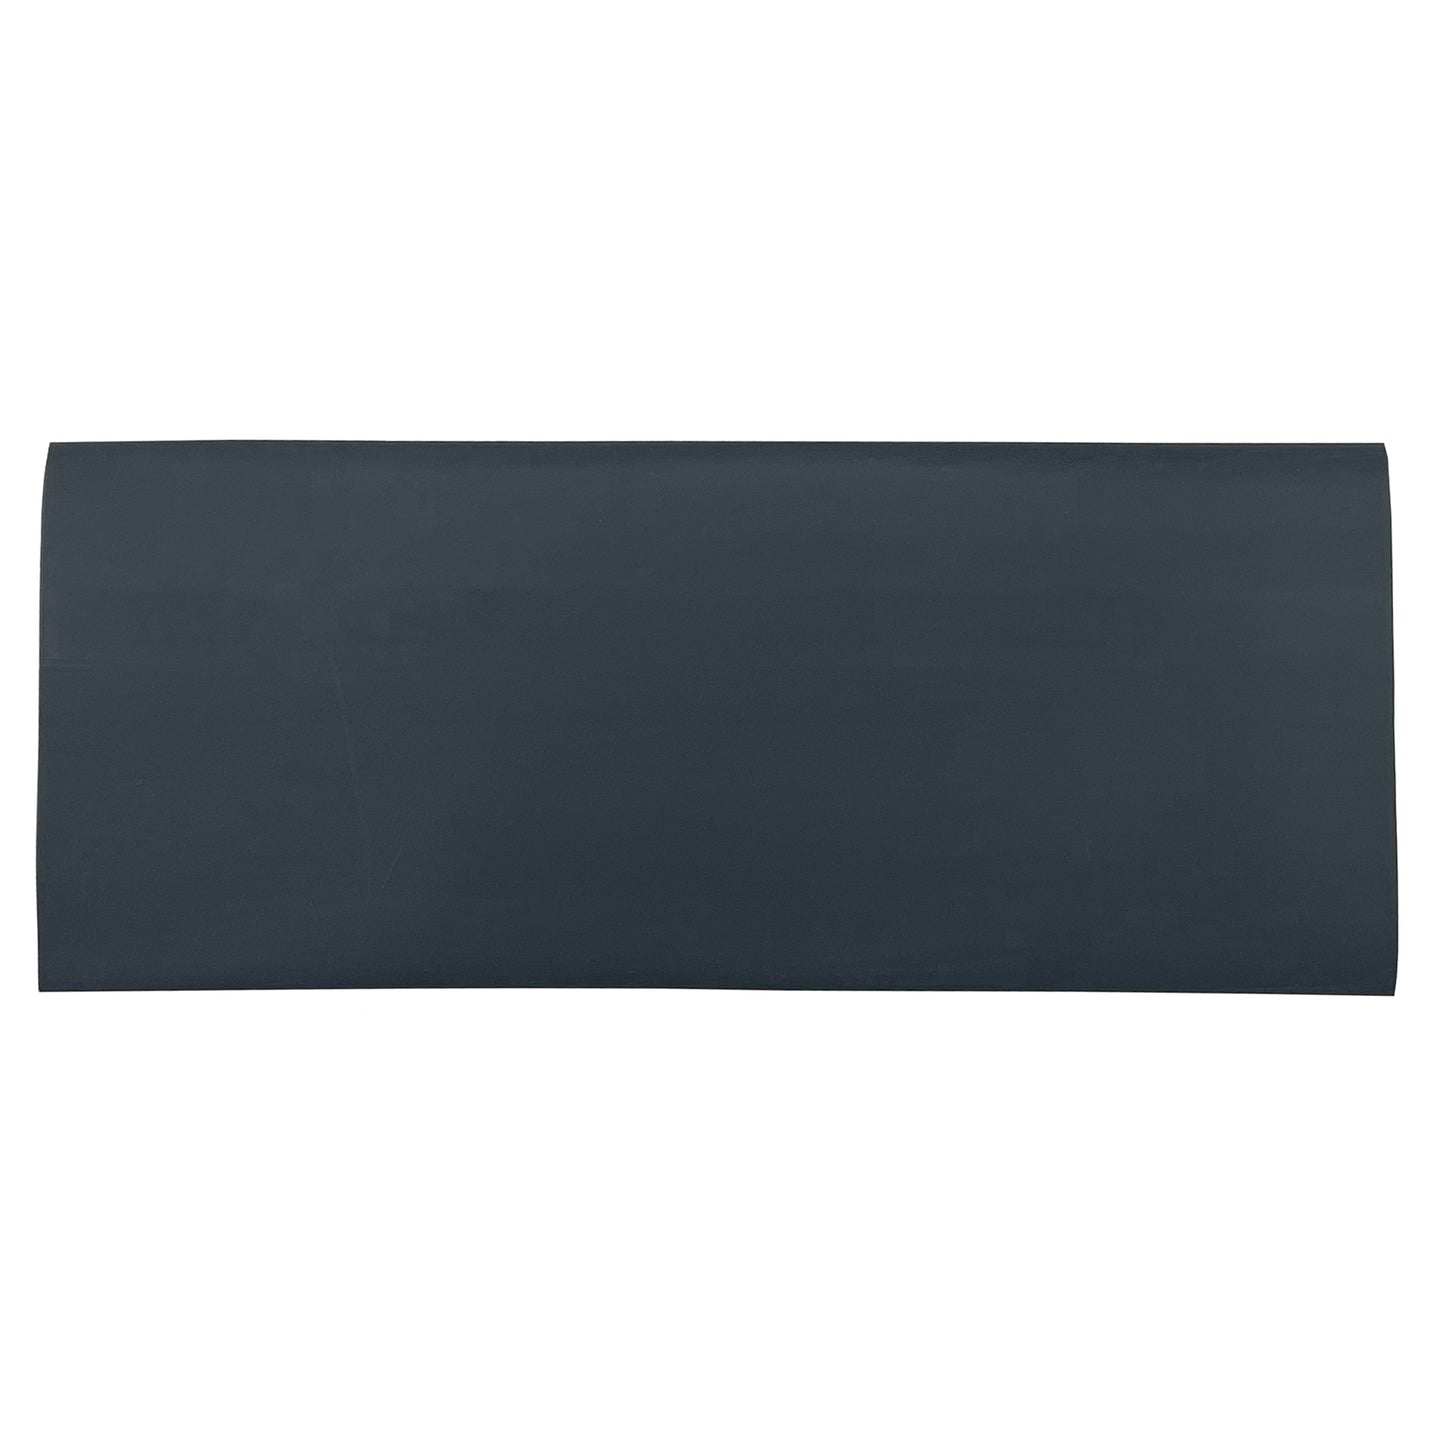 Flexible Thin Single Wall Non-Adhesive Heat Shrink Tubing 2:1 Black 1-1/2" ID - 12" Inch 10 Pack